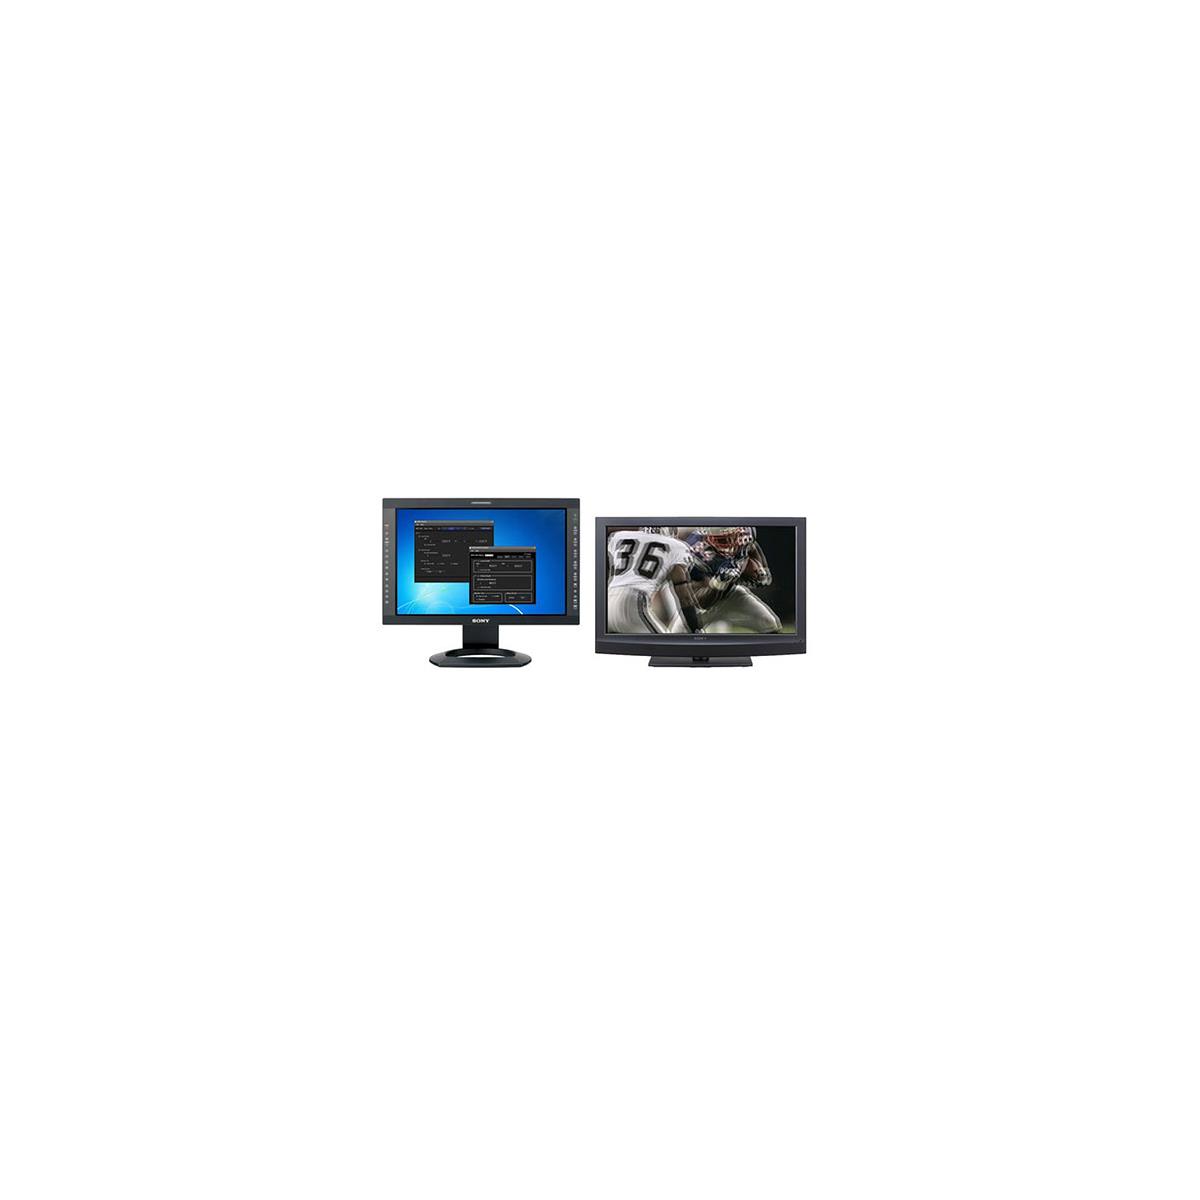 Sony 2D/3D Converter Software for MPE-200 Multi Image Processor -  MPES2D3D1